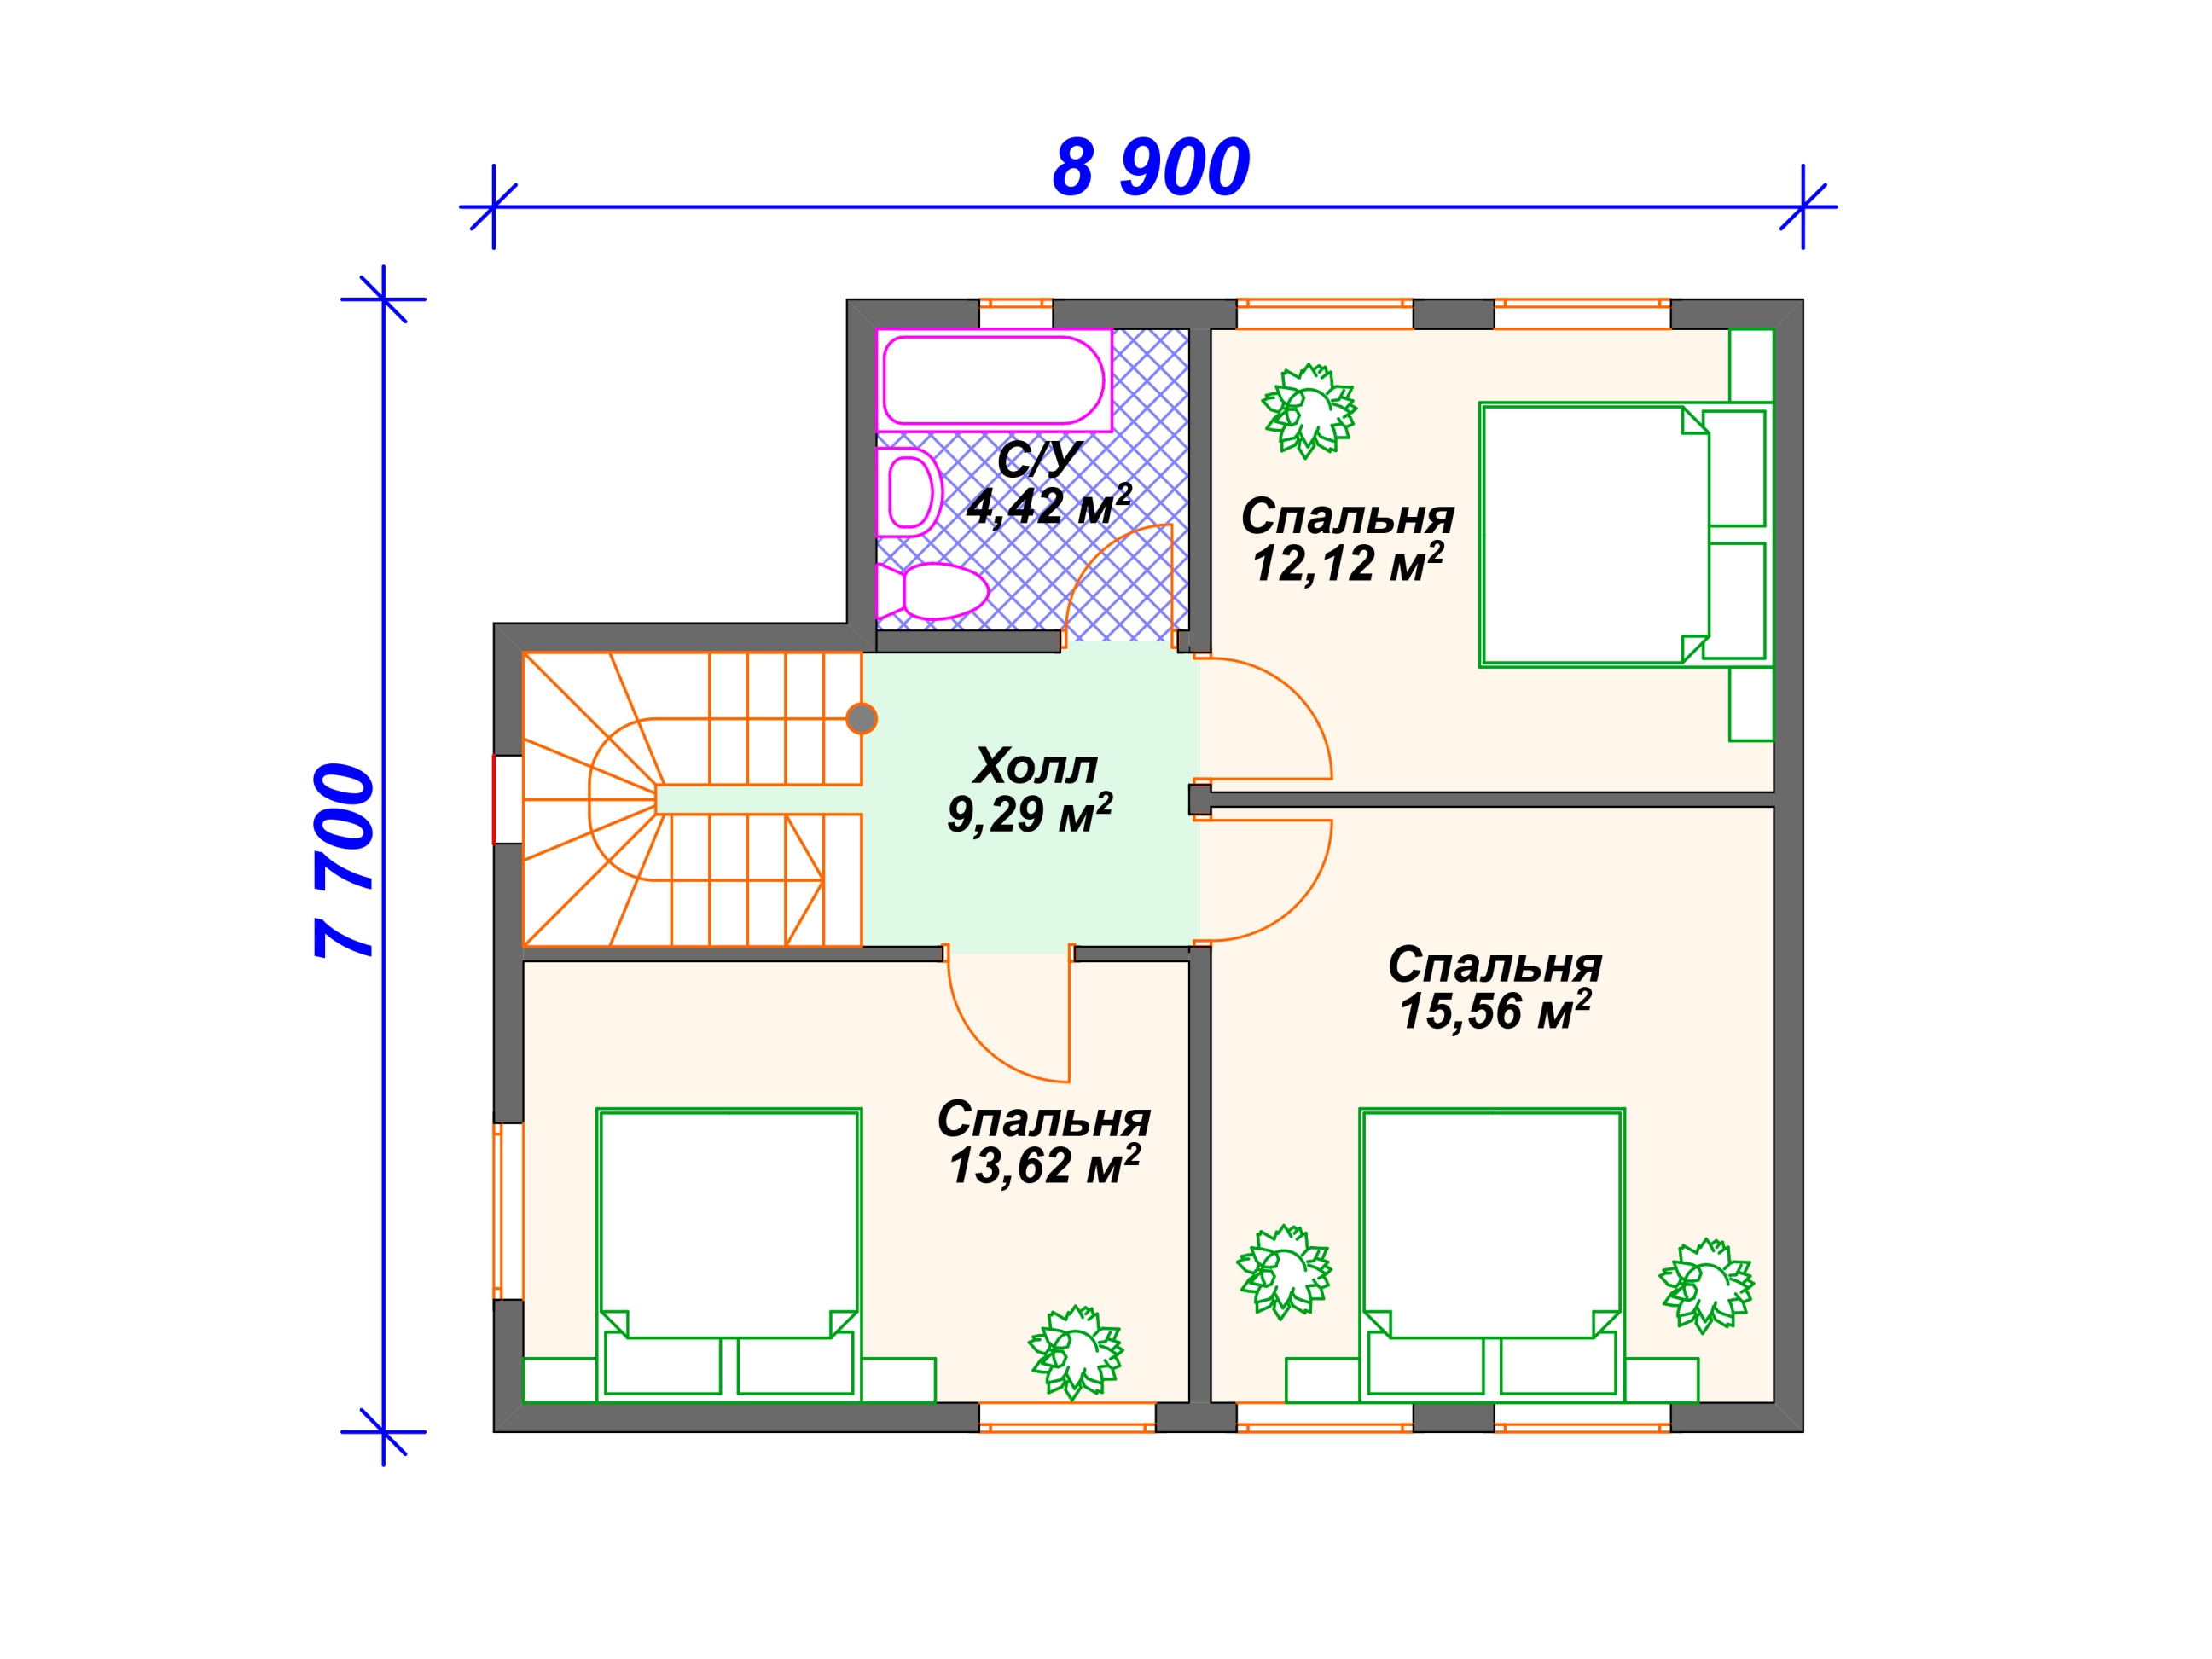 Схема каркасного дома И-008 2 этаж